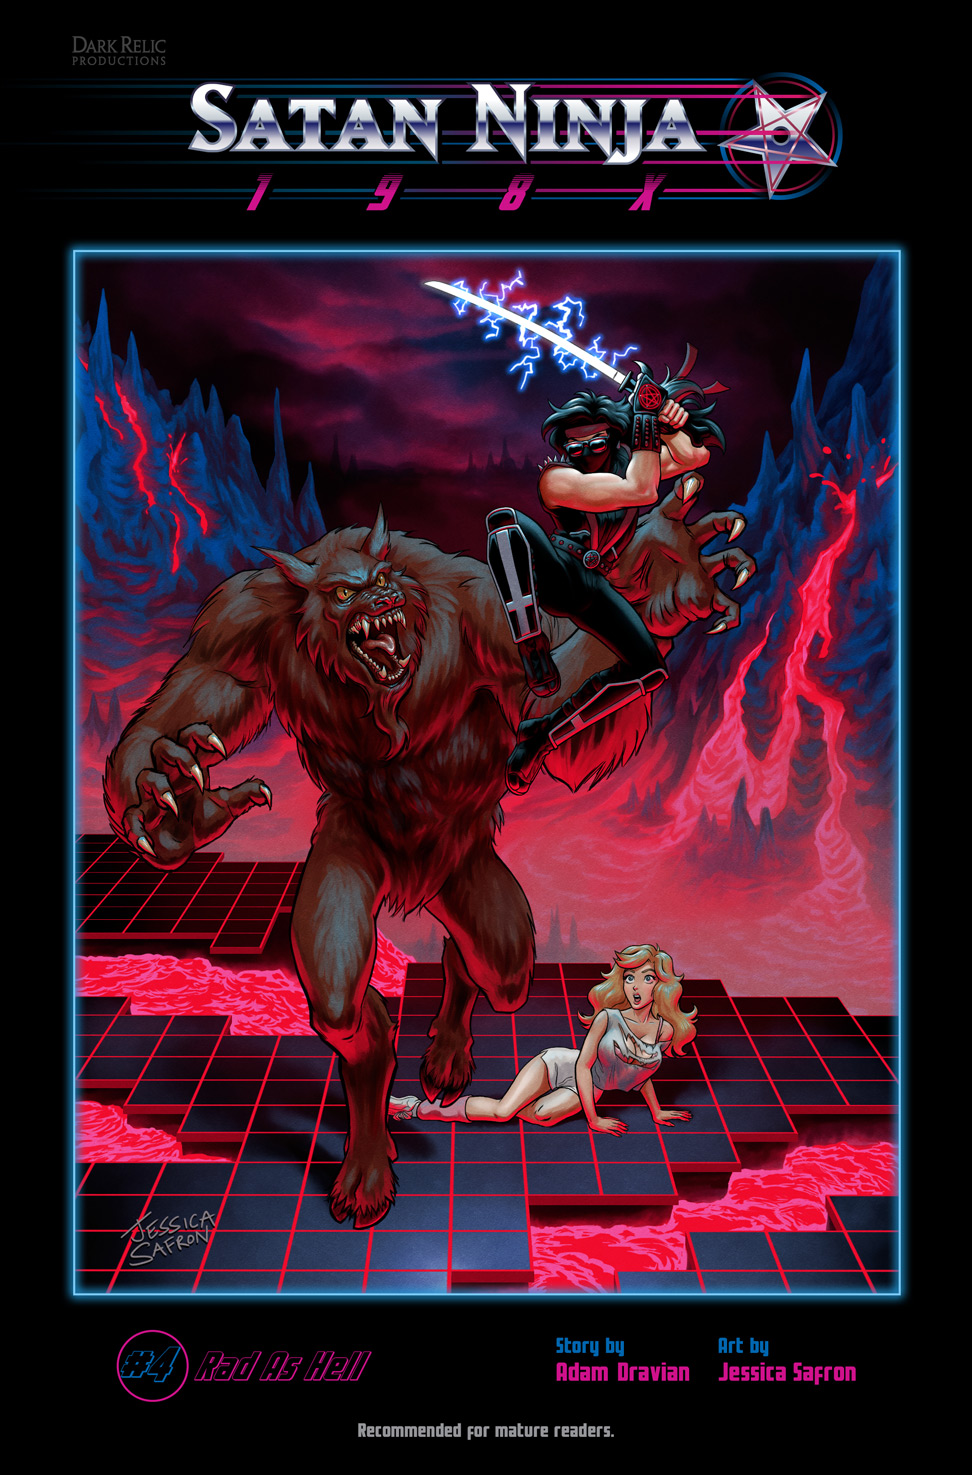 Satan Ninja 198X - Issue 4: Rad As Hell Cover